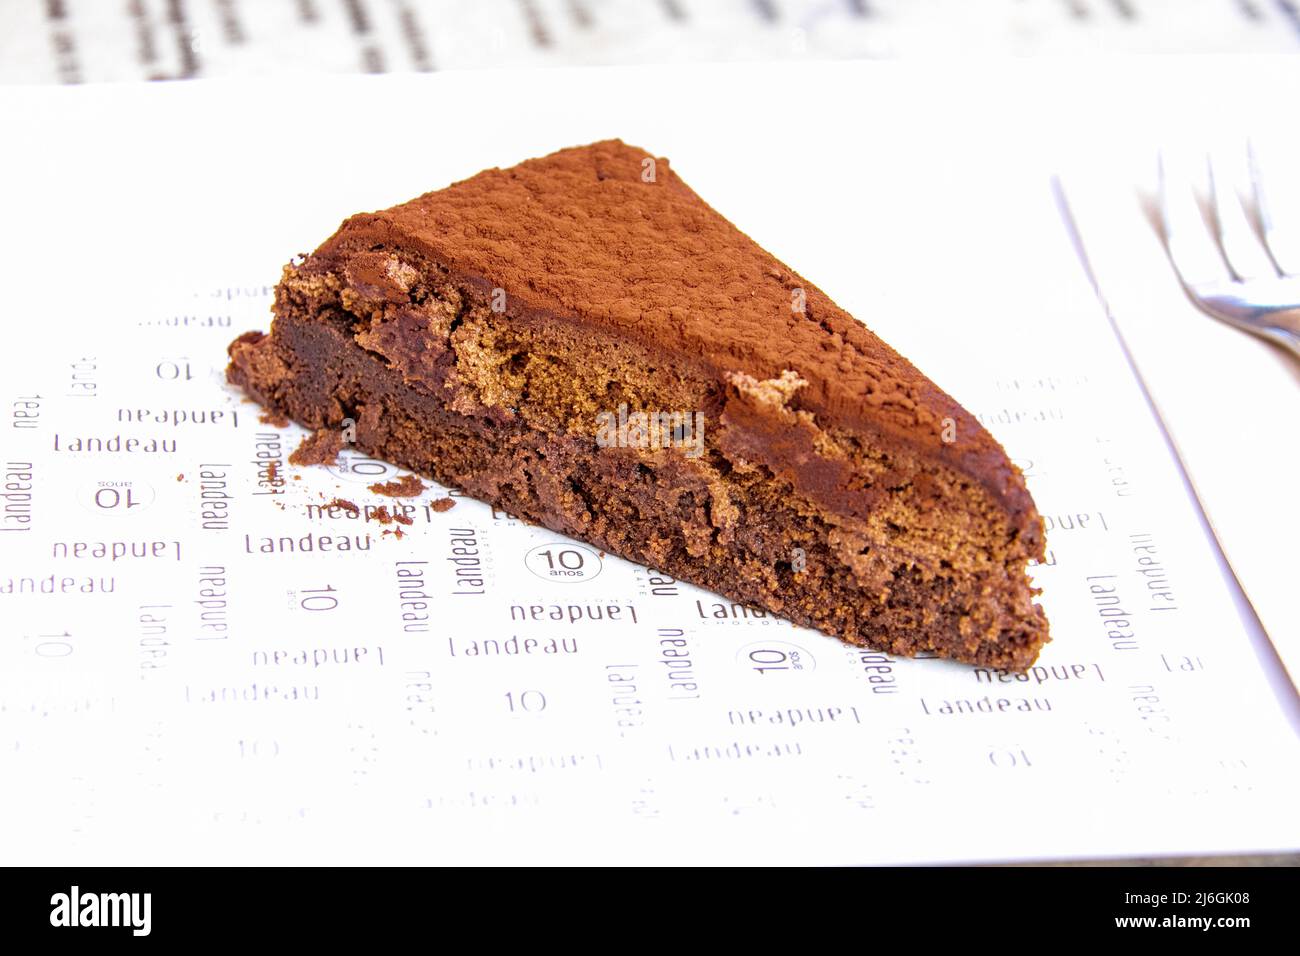 Weltbester Schokoladenkuchen, Landeau-Schokolade, Lissabon, Portugal Stockfoto